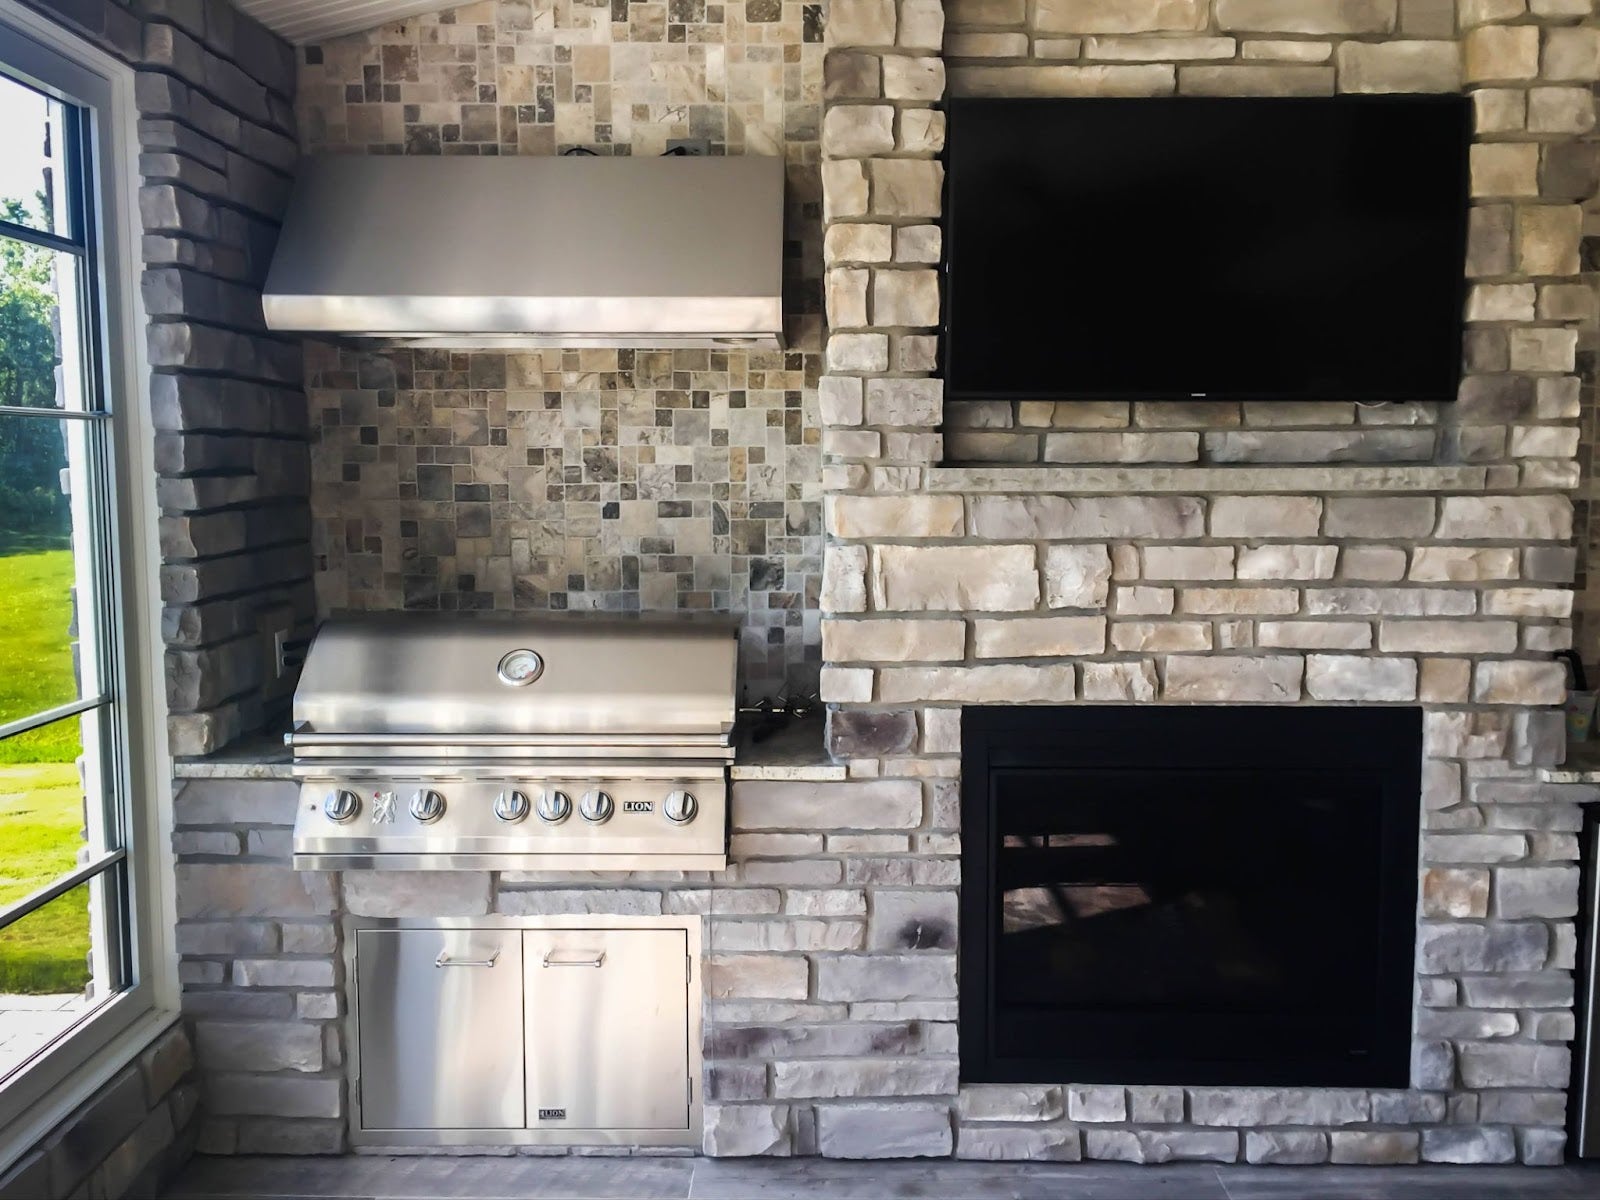 Luxurious outdoor kitchen setup with Proline range hood, matching grill, and stone fireplace under a flat-screen TV - prolinerangehoods.com